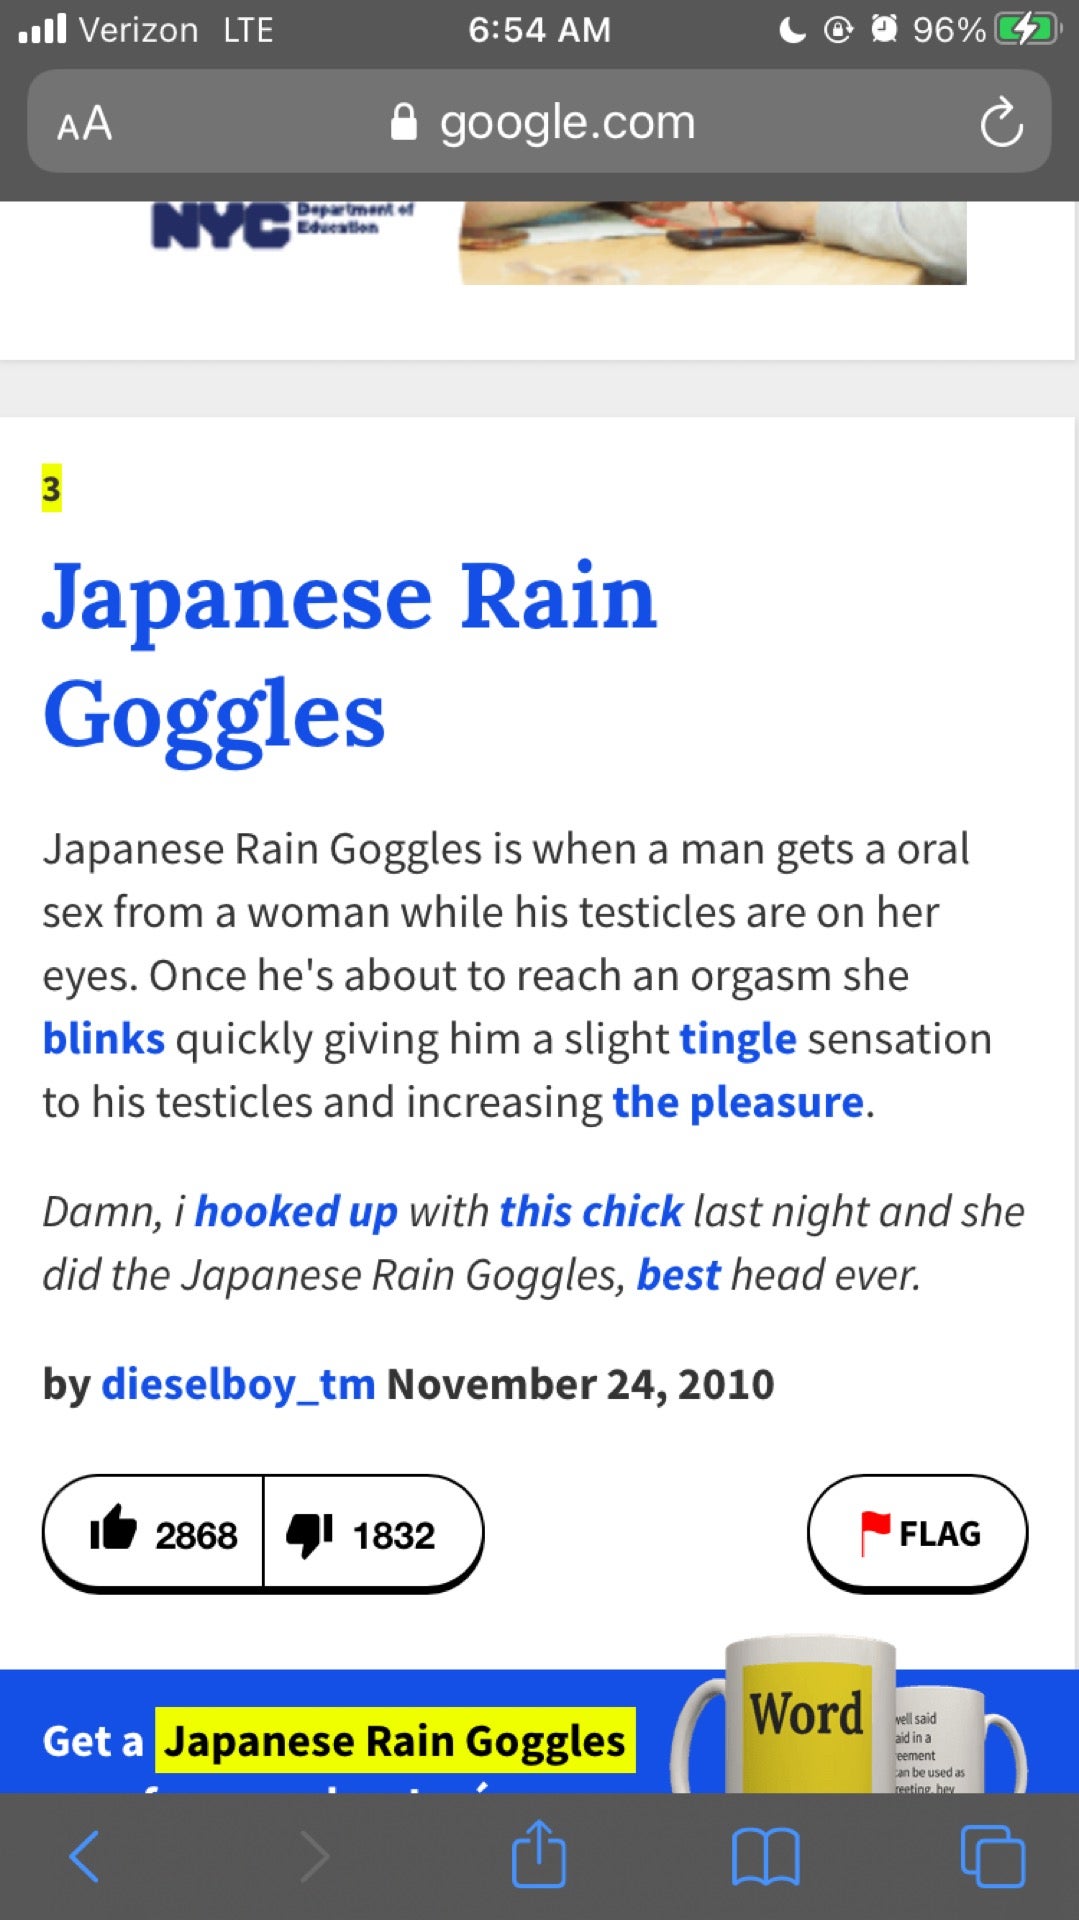 alfi kurniawan recommends japanese rain goggles pic